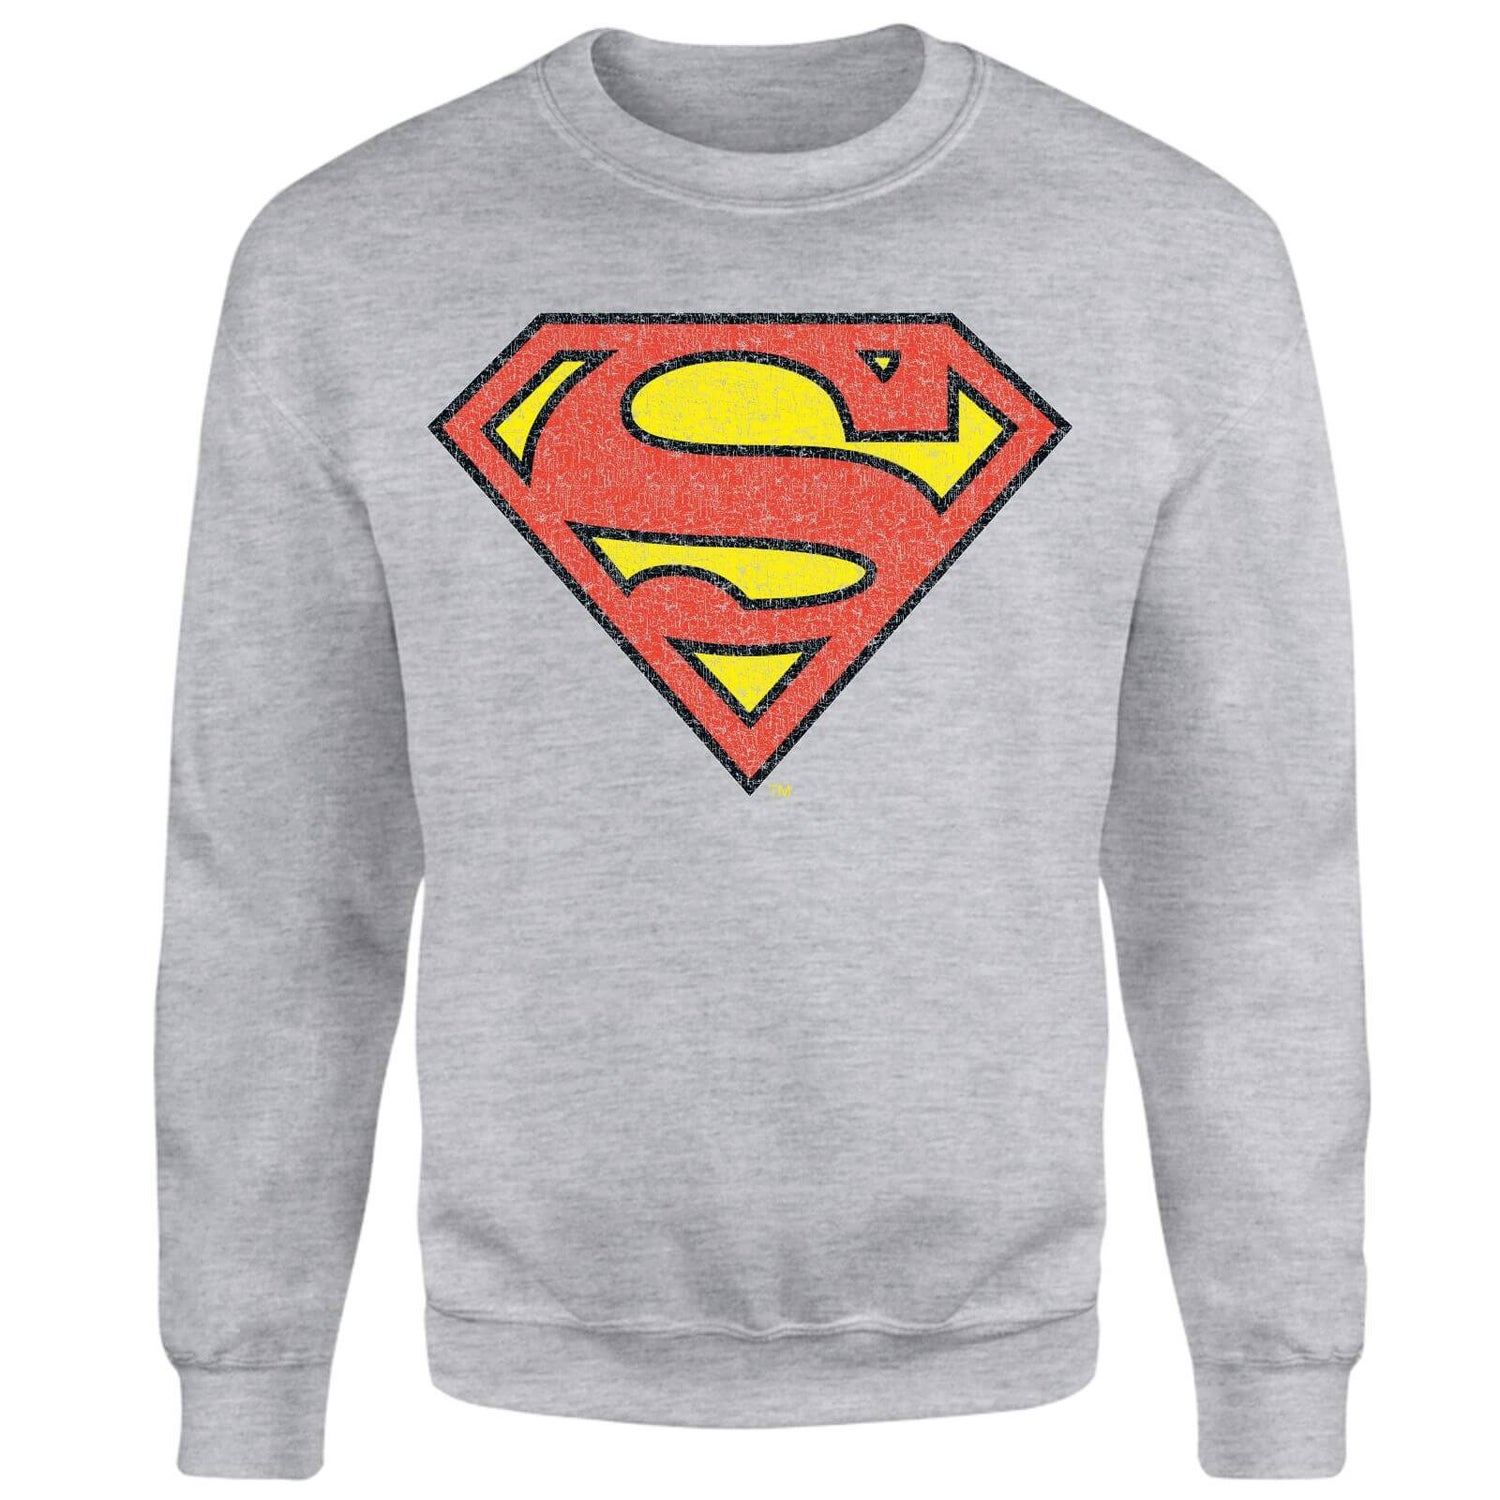 Official Superman Crackle Logo Sweatshirt - Grey